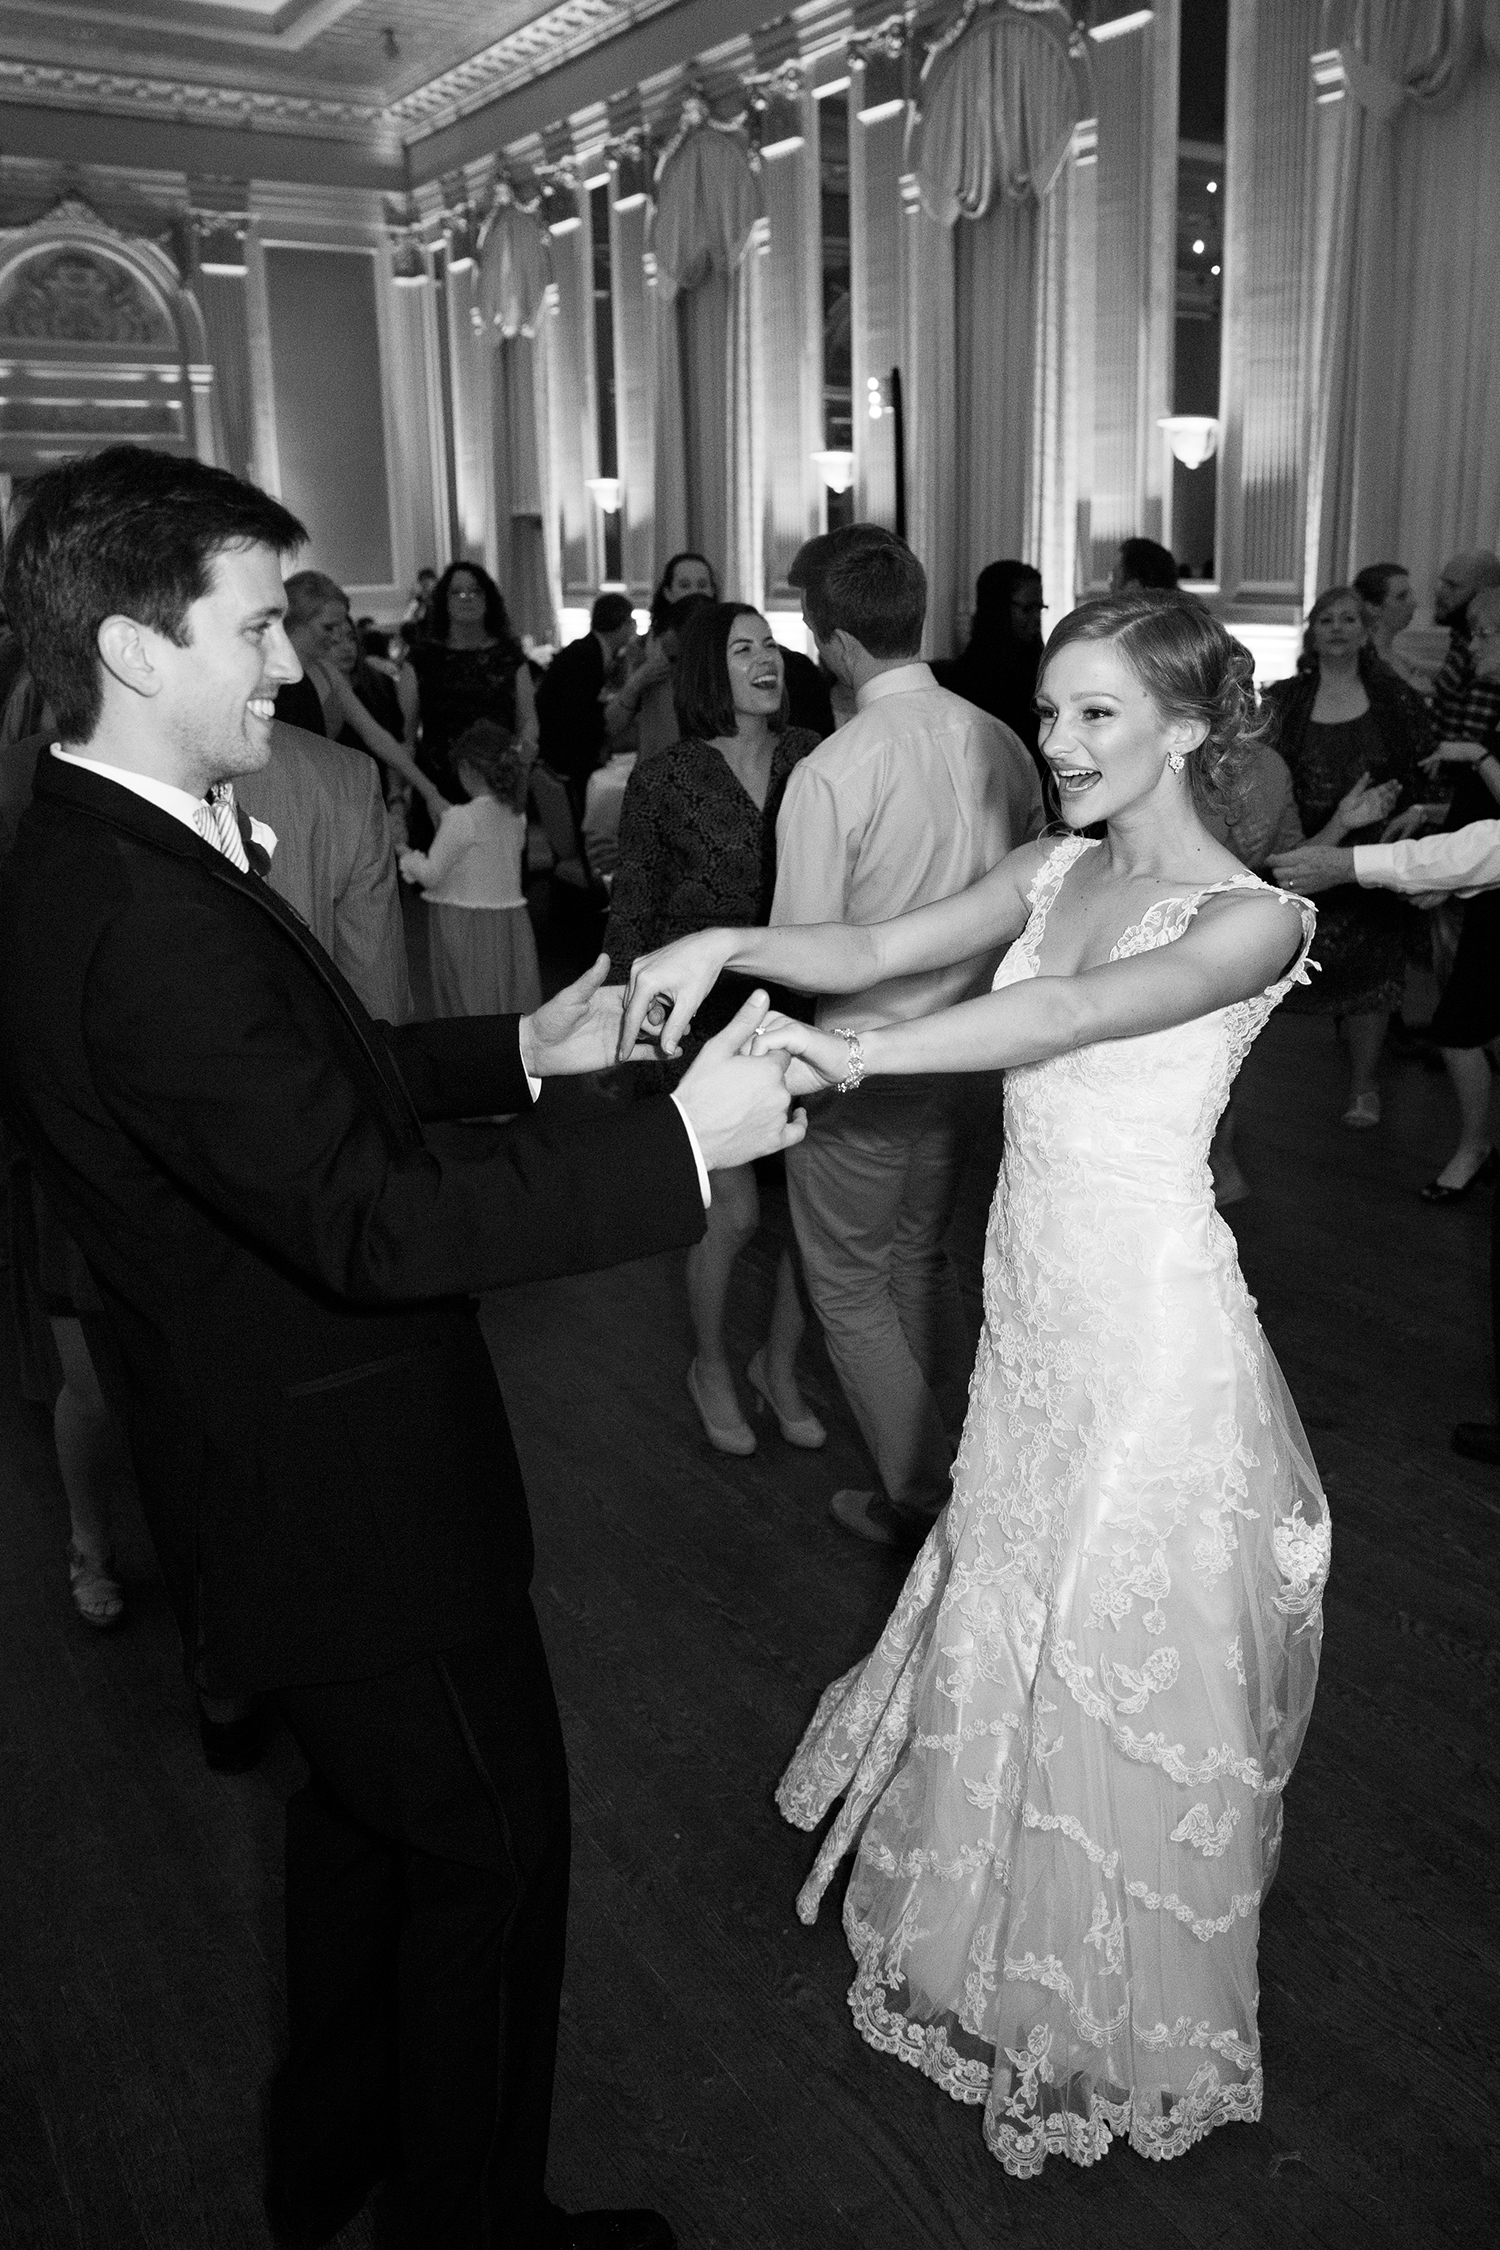 Noelle and Hunters Ballroom Wedding - Image Property of www.j-dphoto.com